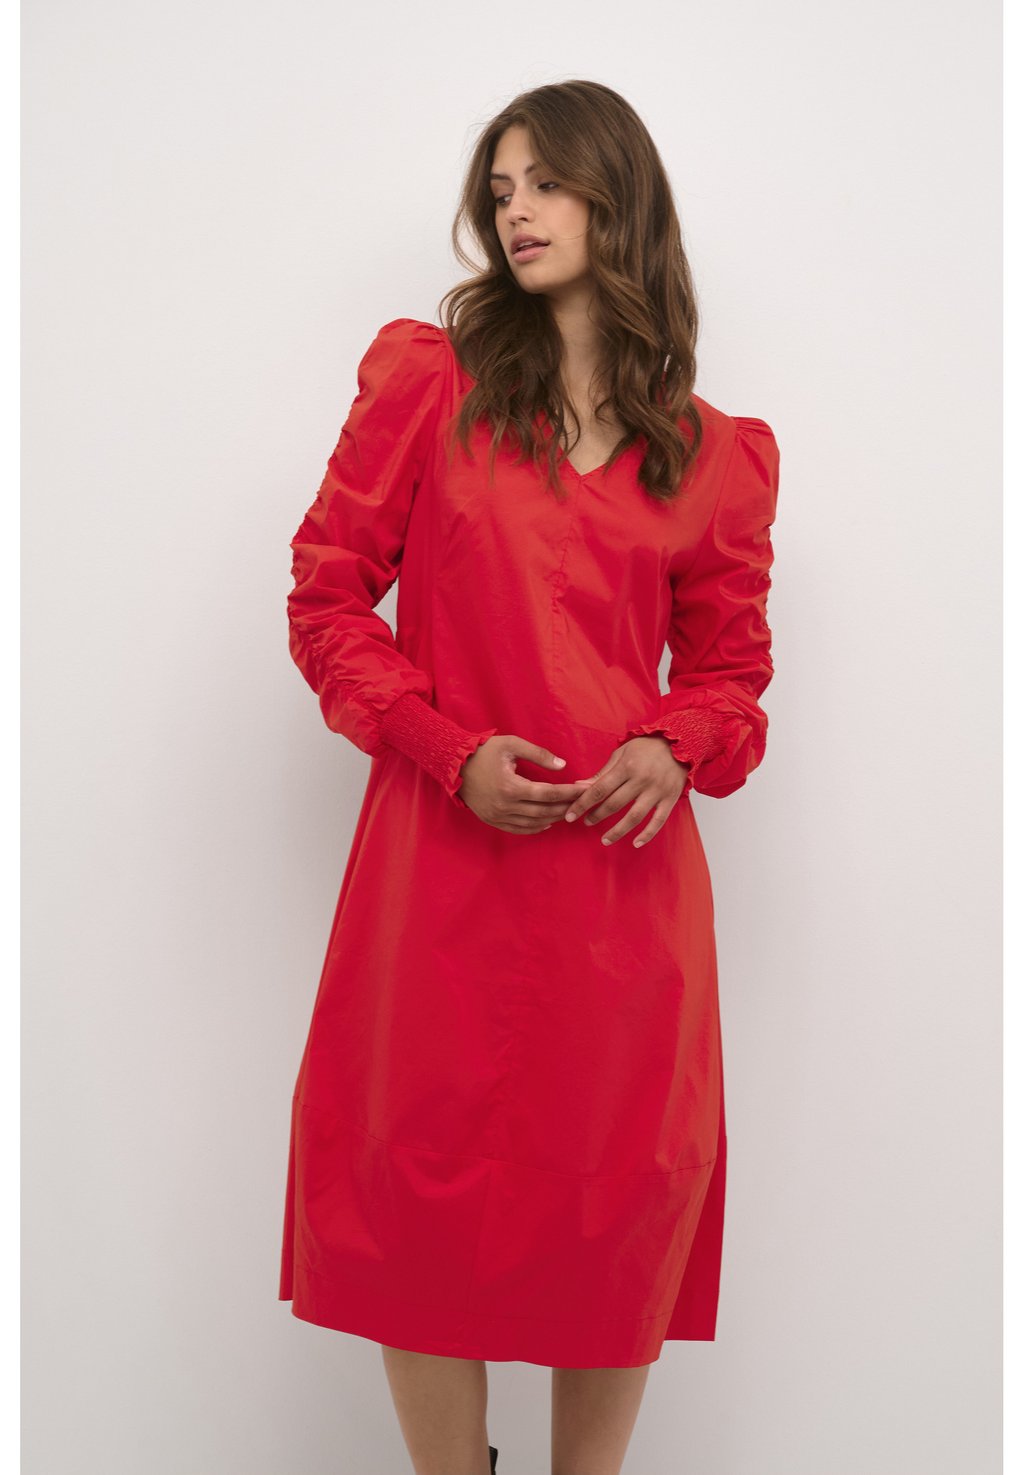 Дневное платье CUANTOINETT PUFF Culture, цвет fiery red